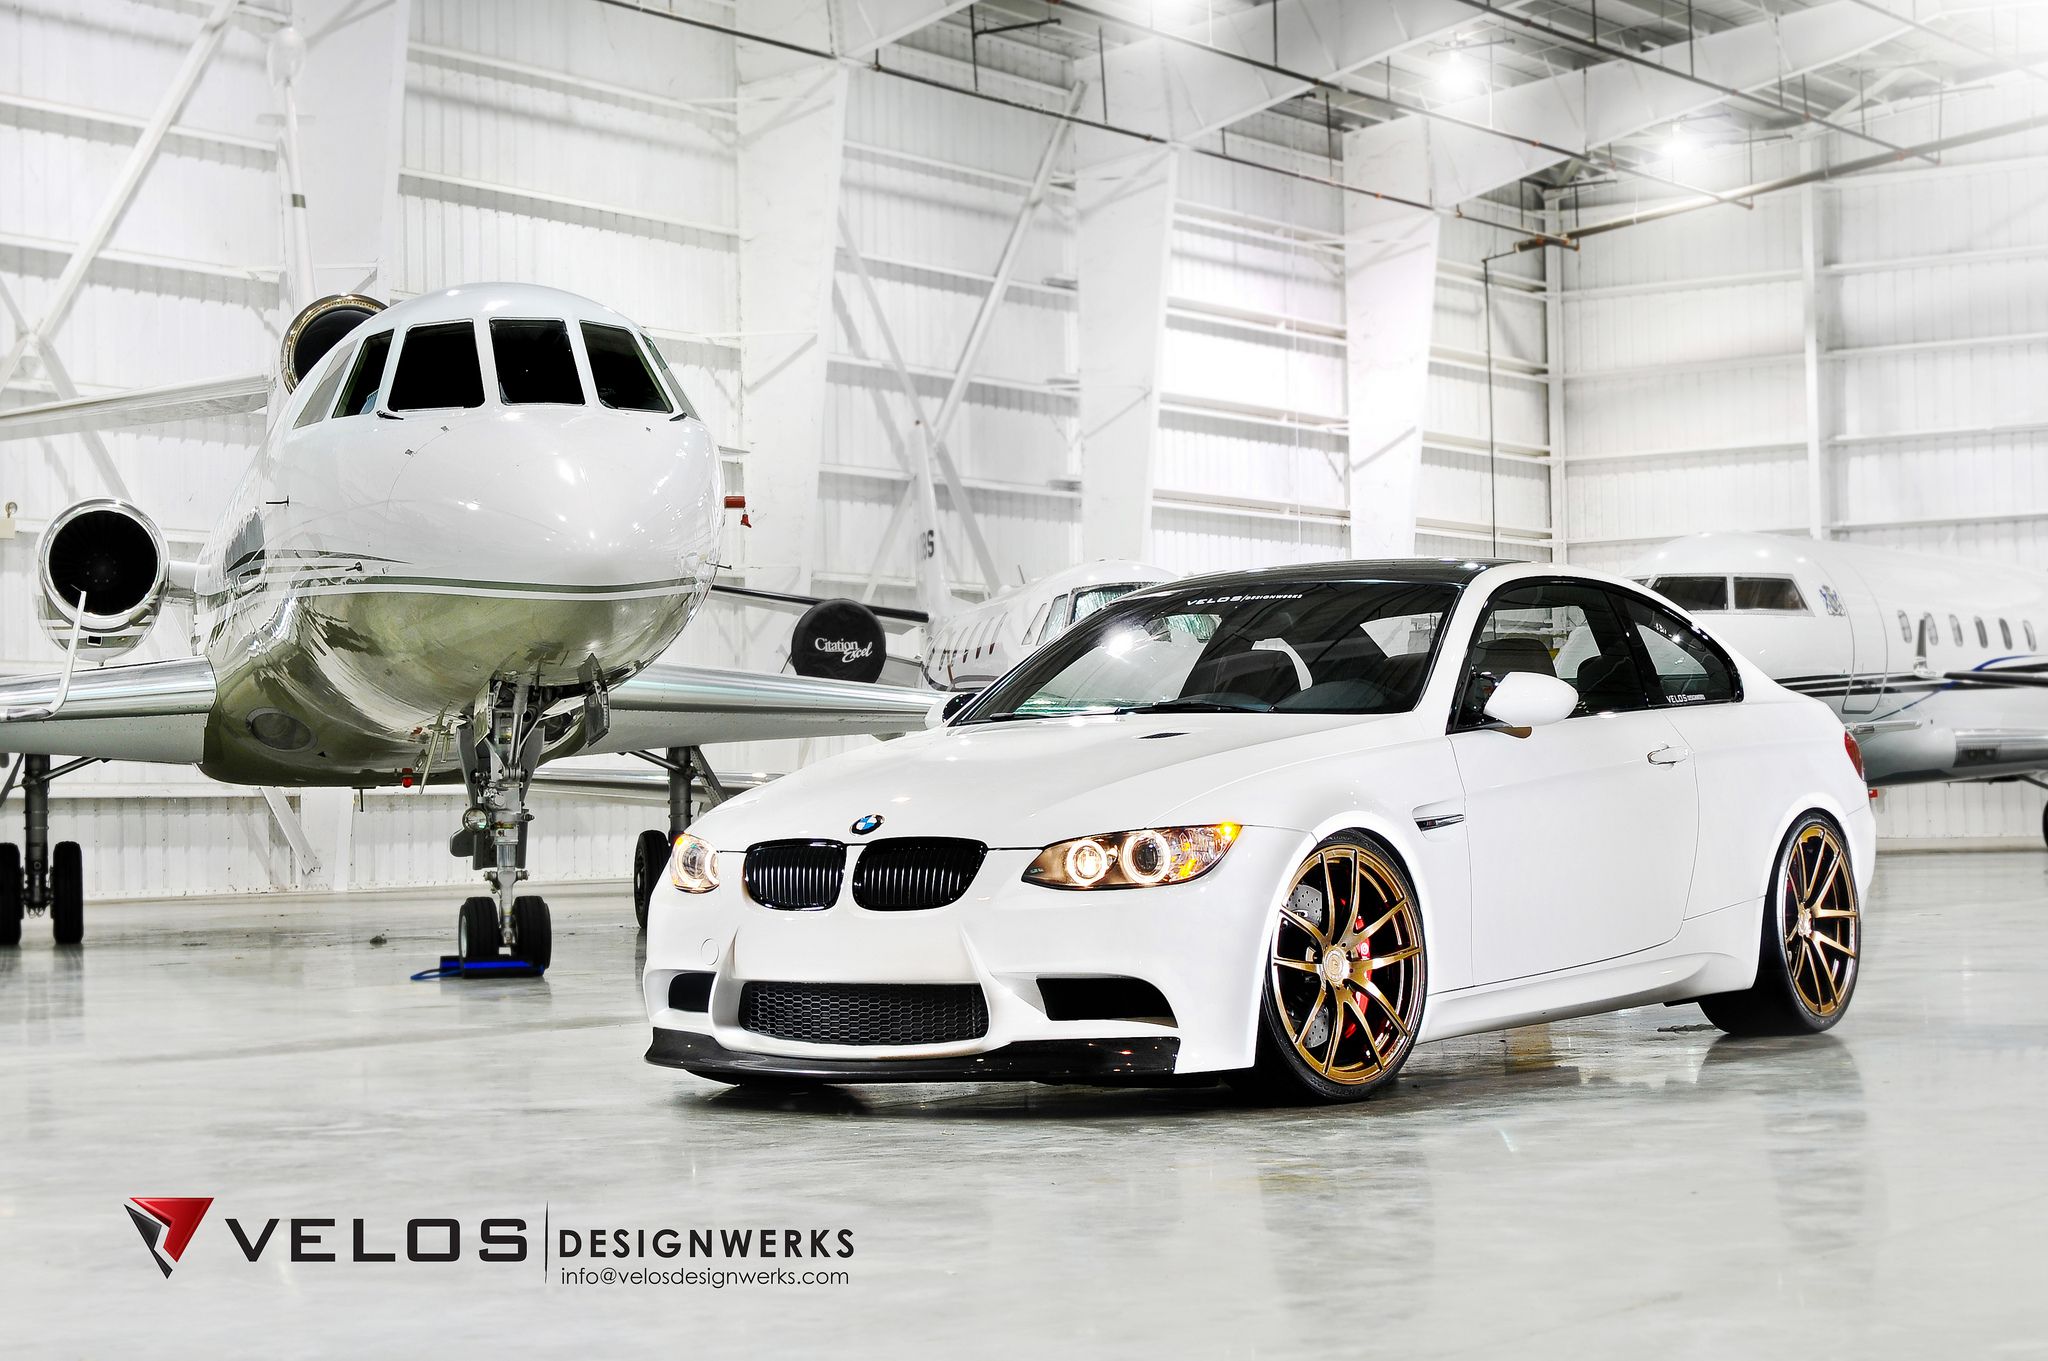 2012 BMW M3 by Velos Designwerks